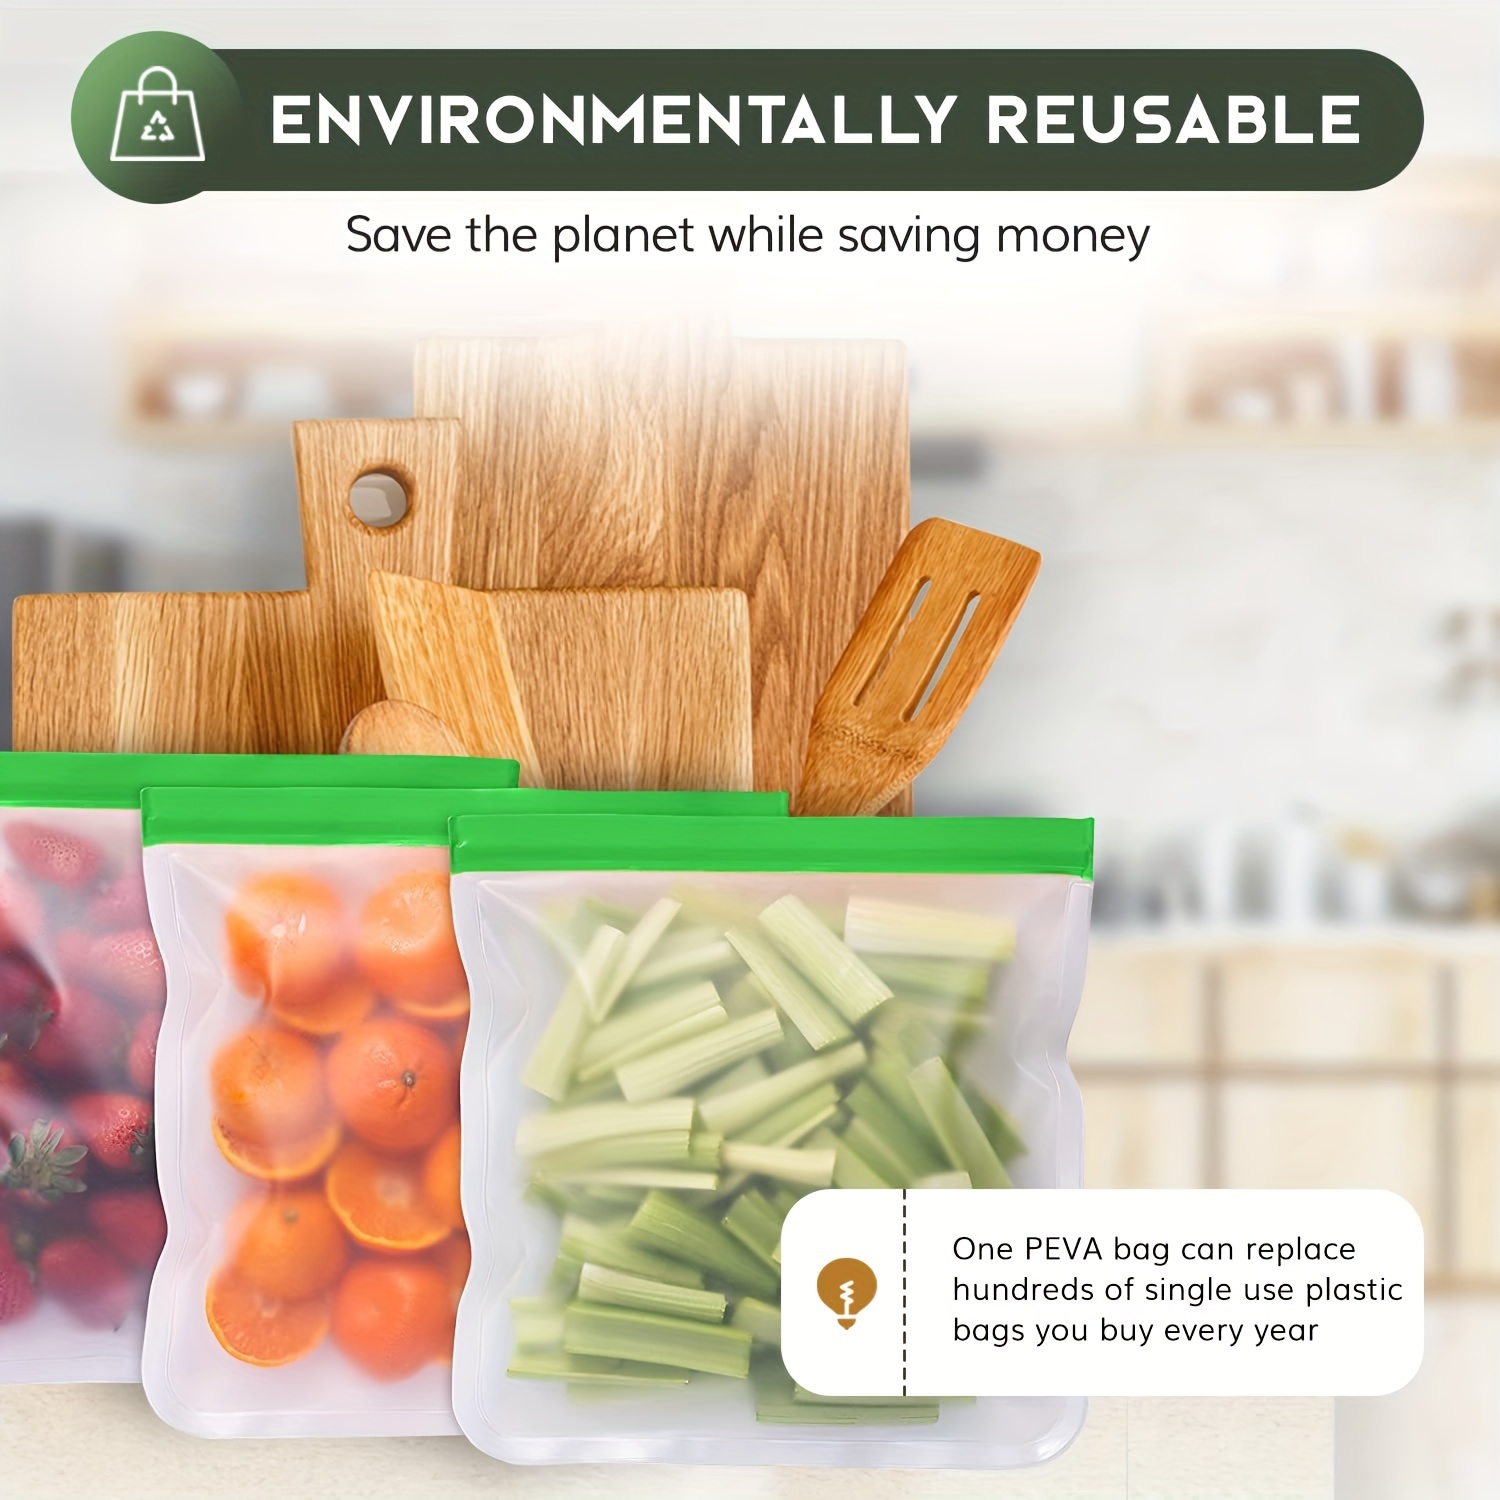 Reusable Snack Bag / Sustainable Ziploc Bag Replacement / Eco